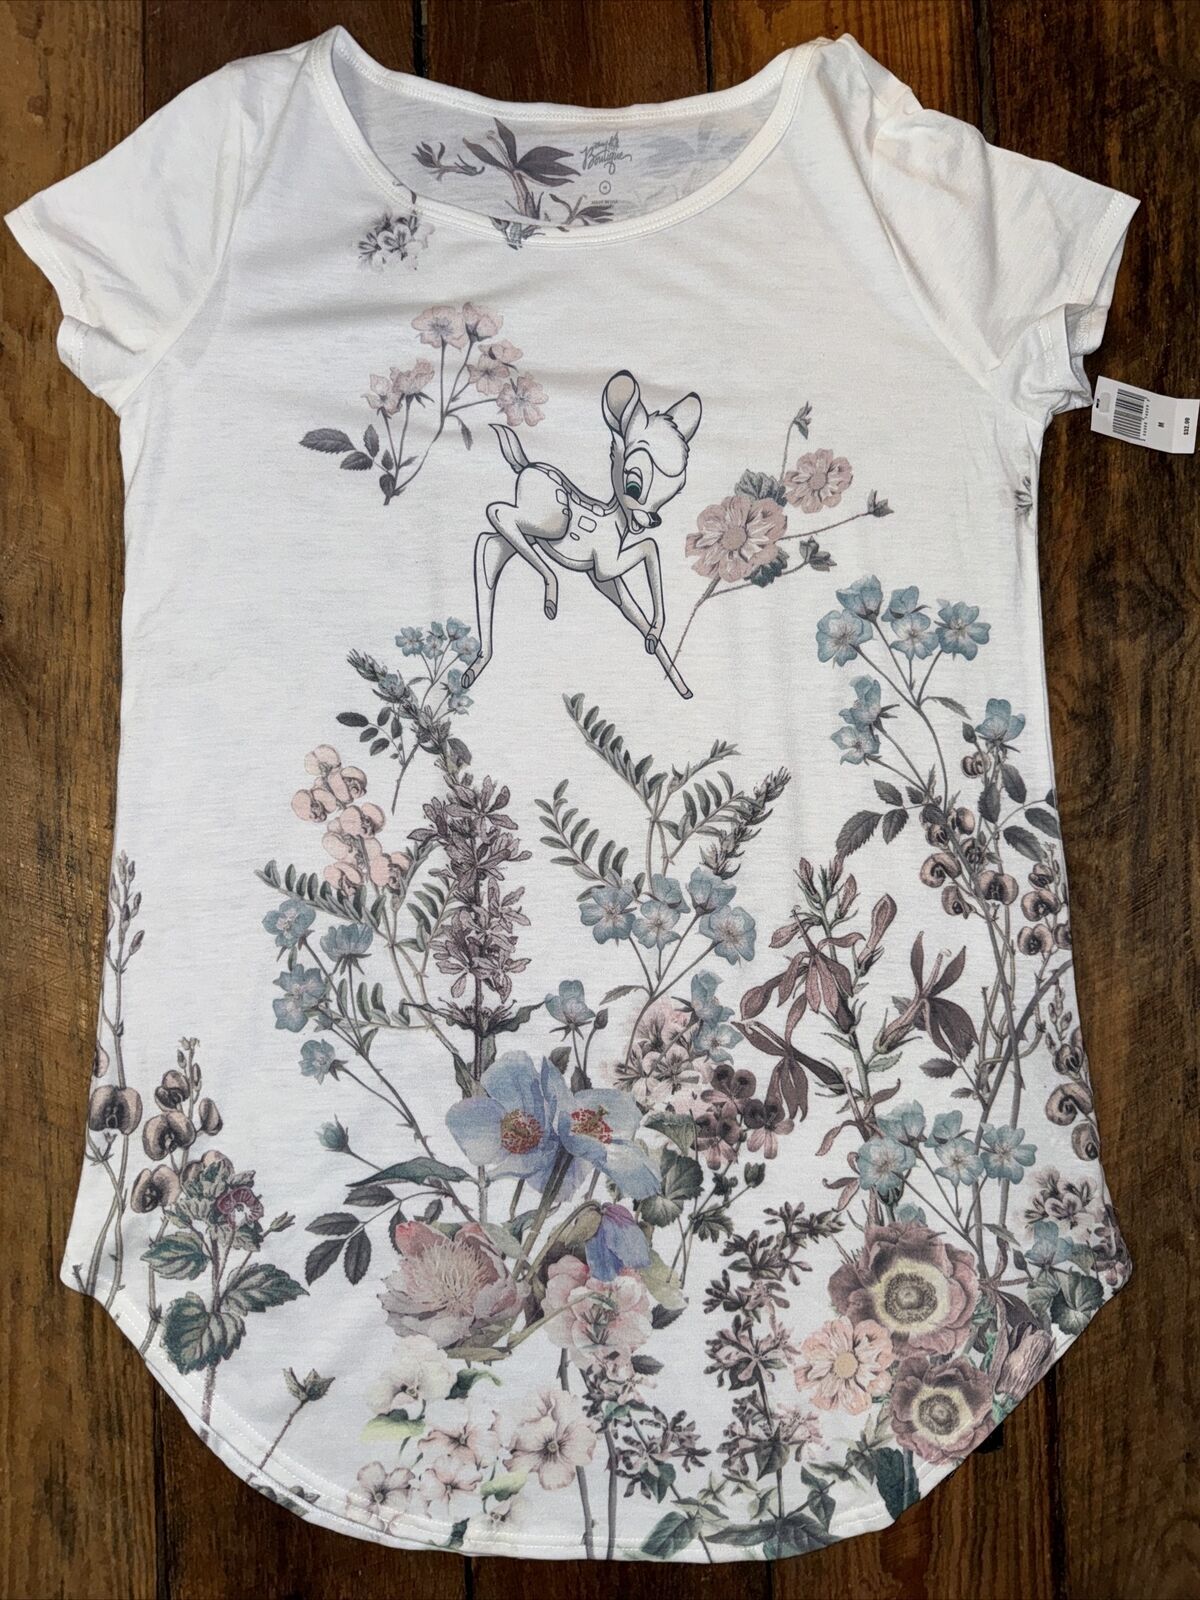 MEDIUM Disney Boutique BAMBI Ladies Tee Shirt SOFT Floral Print Womens Top NWT